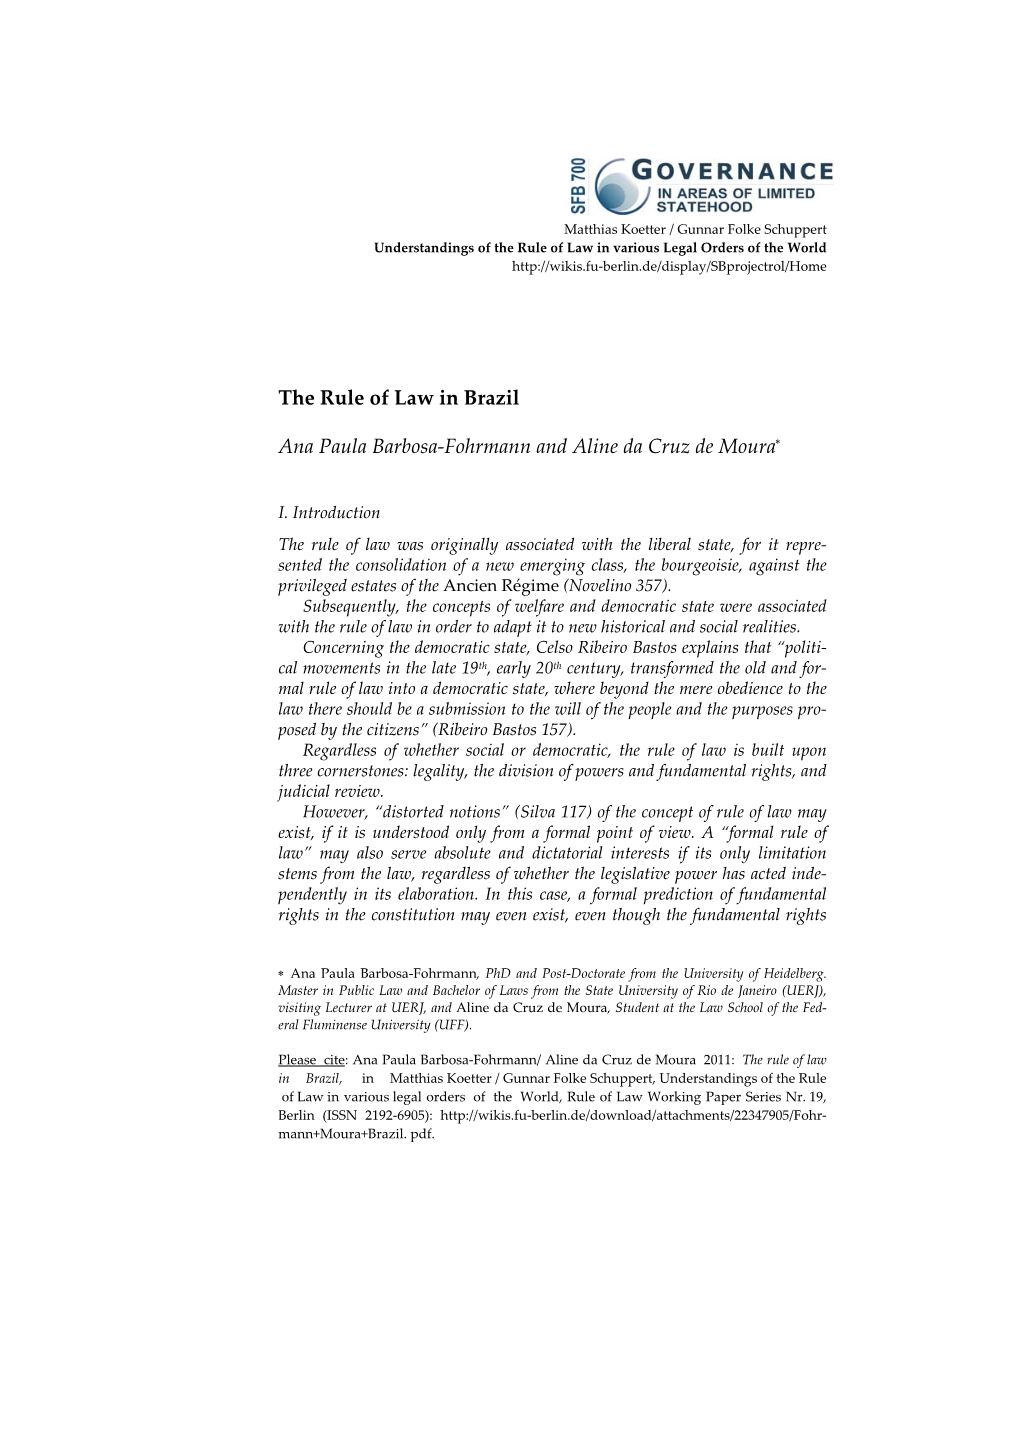 The Rule of Law in Brazil Ana Paula Barbosa-Fohrmann and Aline Da